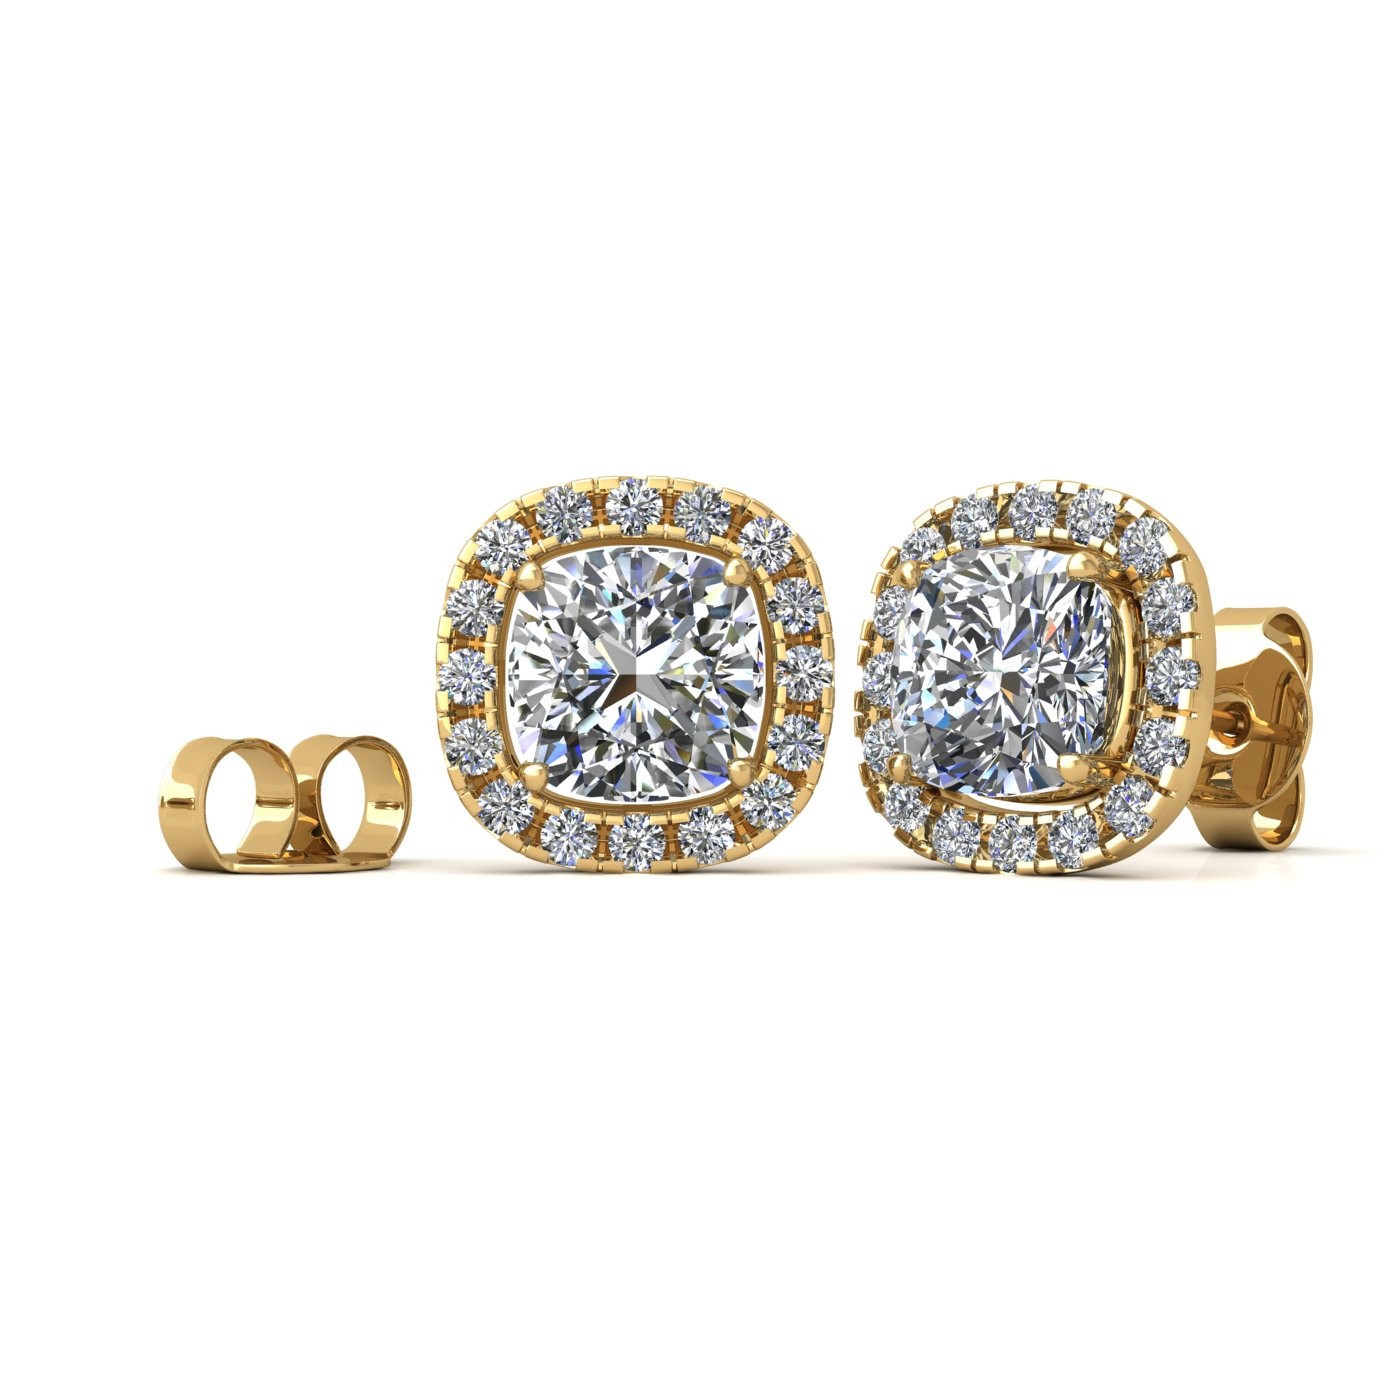 18k yellow gold  0,7 ct each (1,4 tcw) 4 prongs cushion shape diamond earrings with diamond pavÉ set halo Photos & images